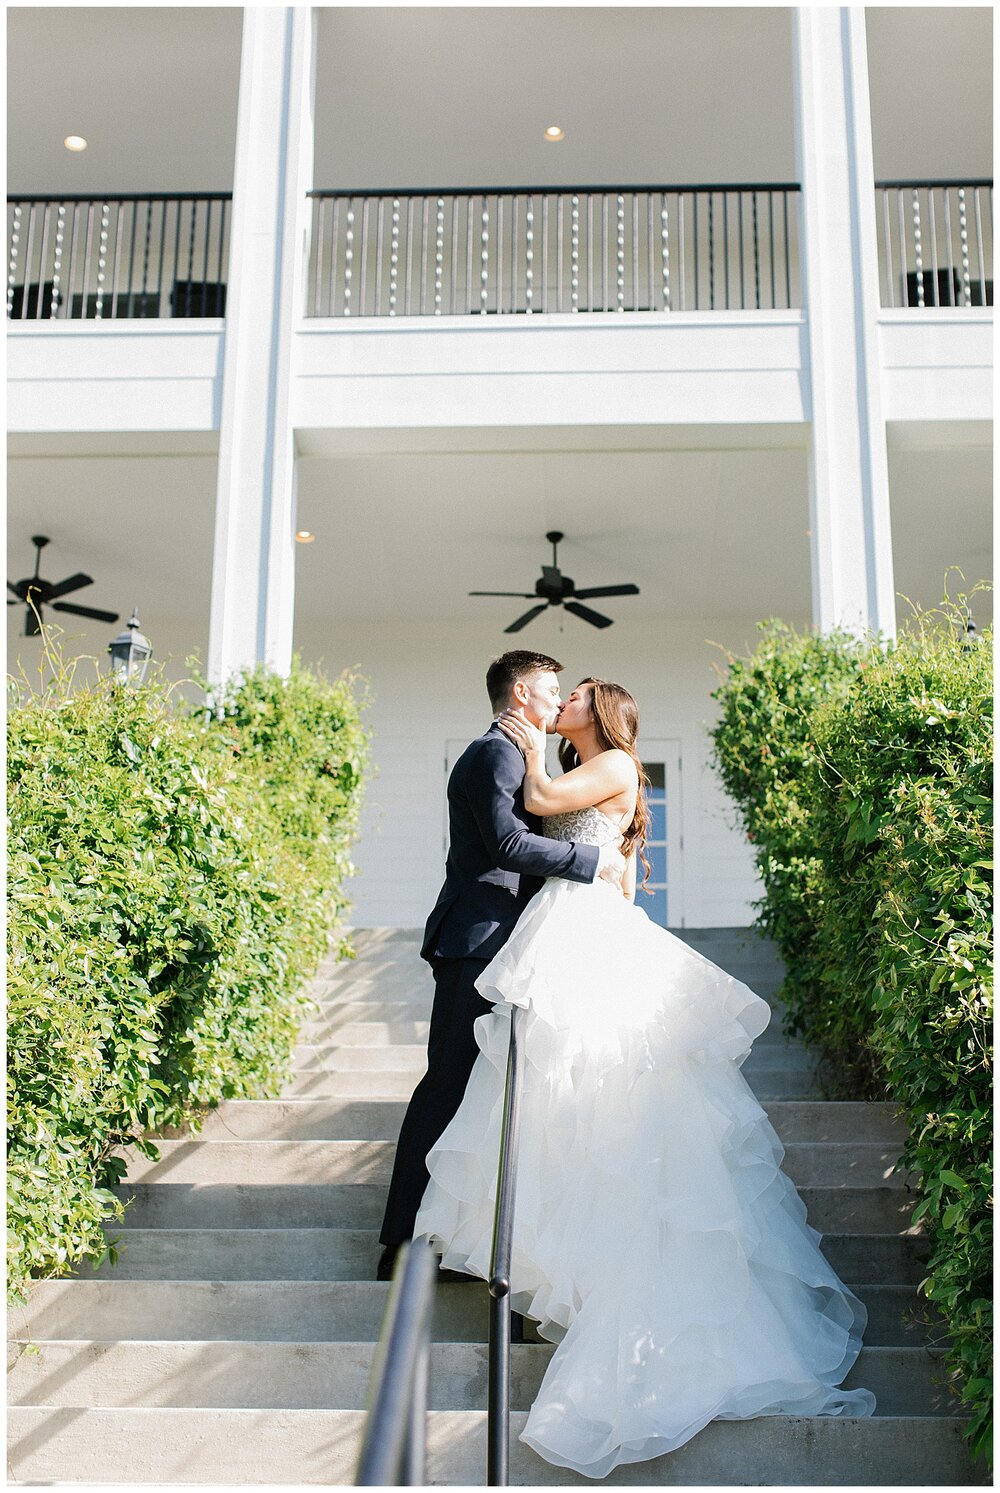 Kendall Point - Boerne TX Wedding Photography26.jpg